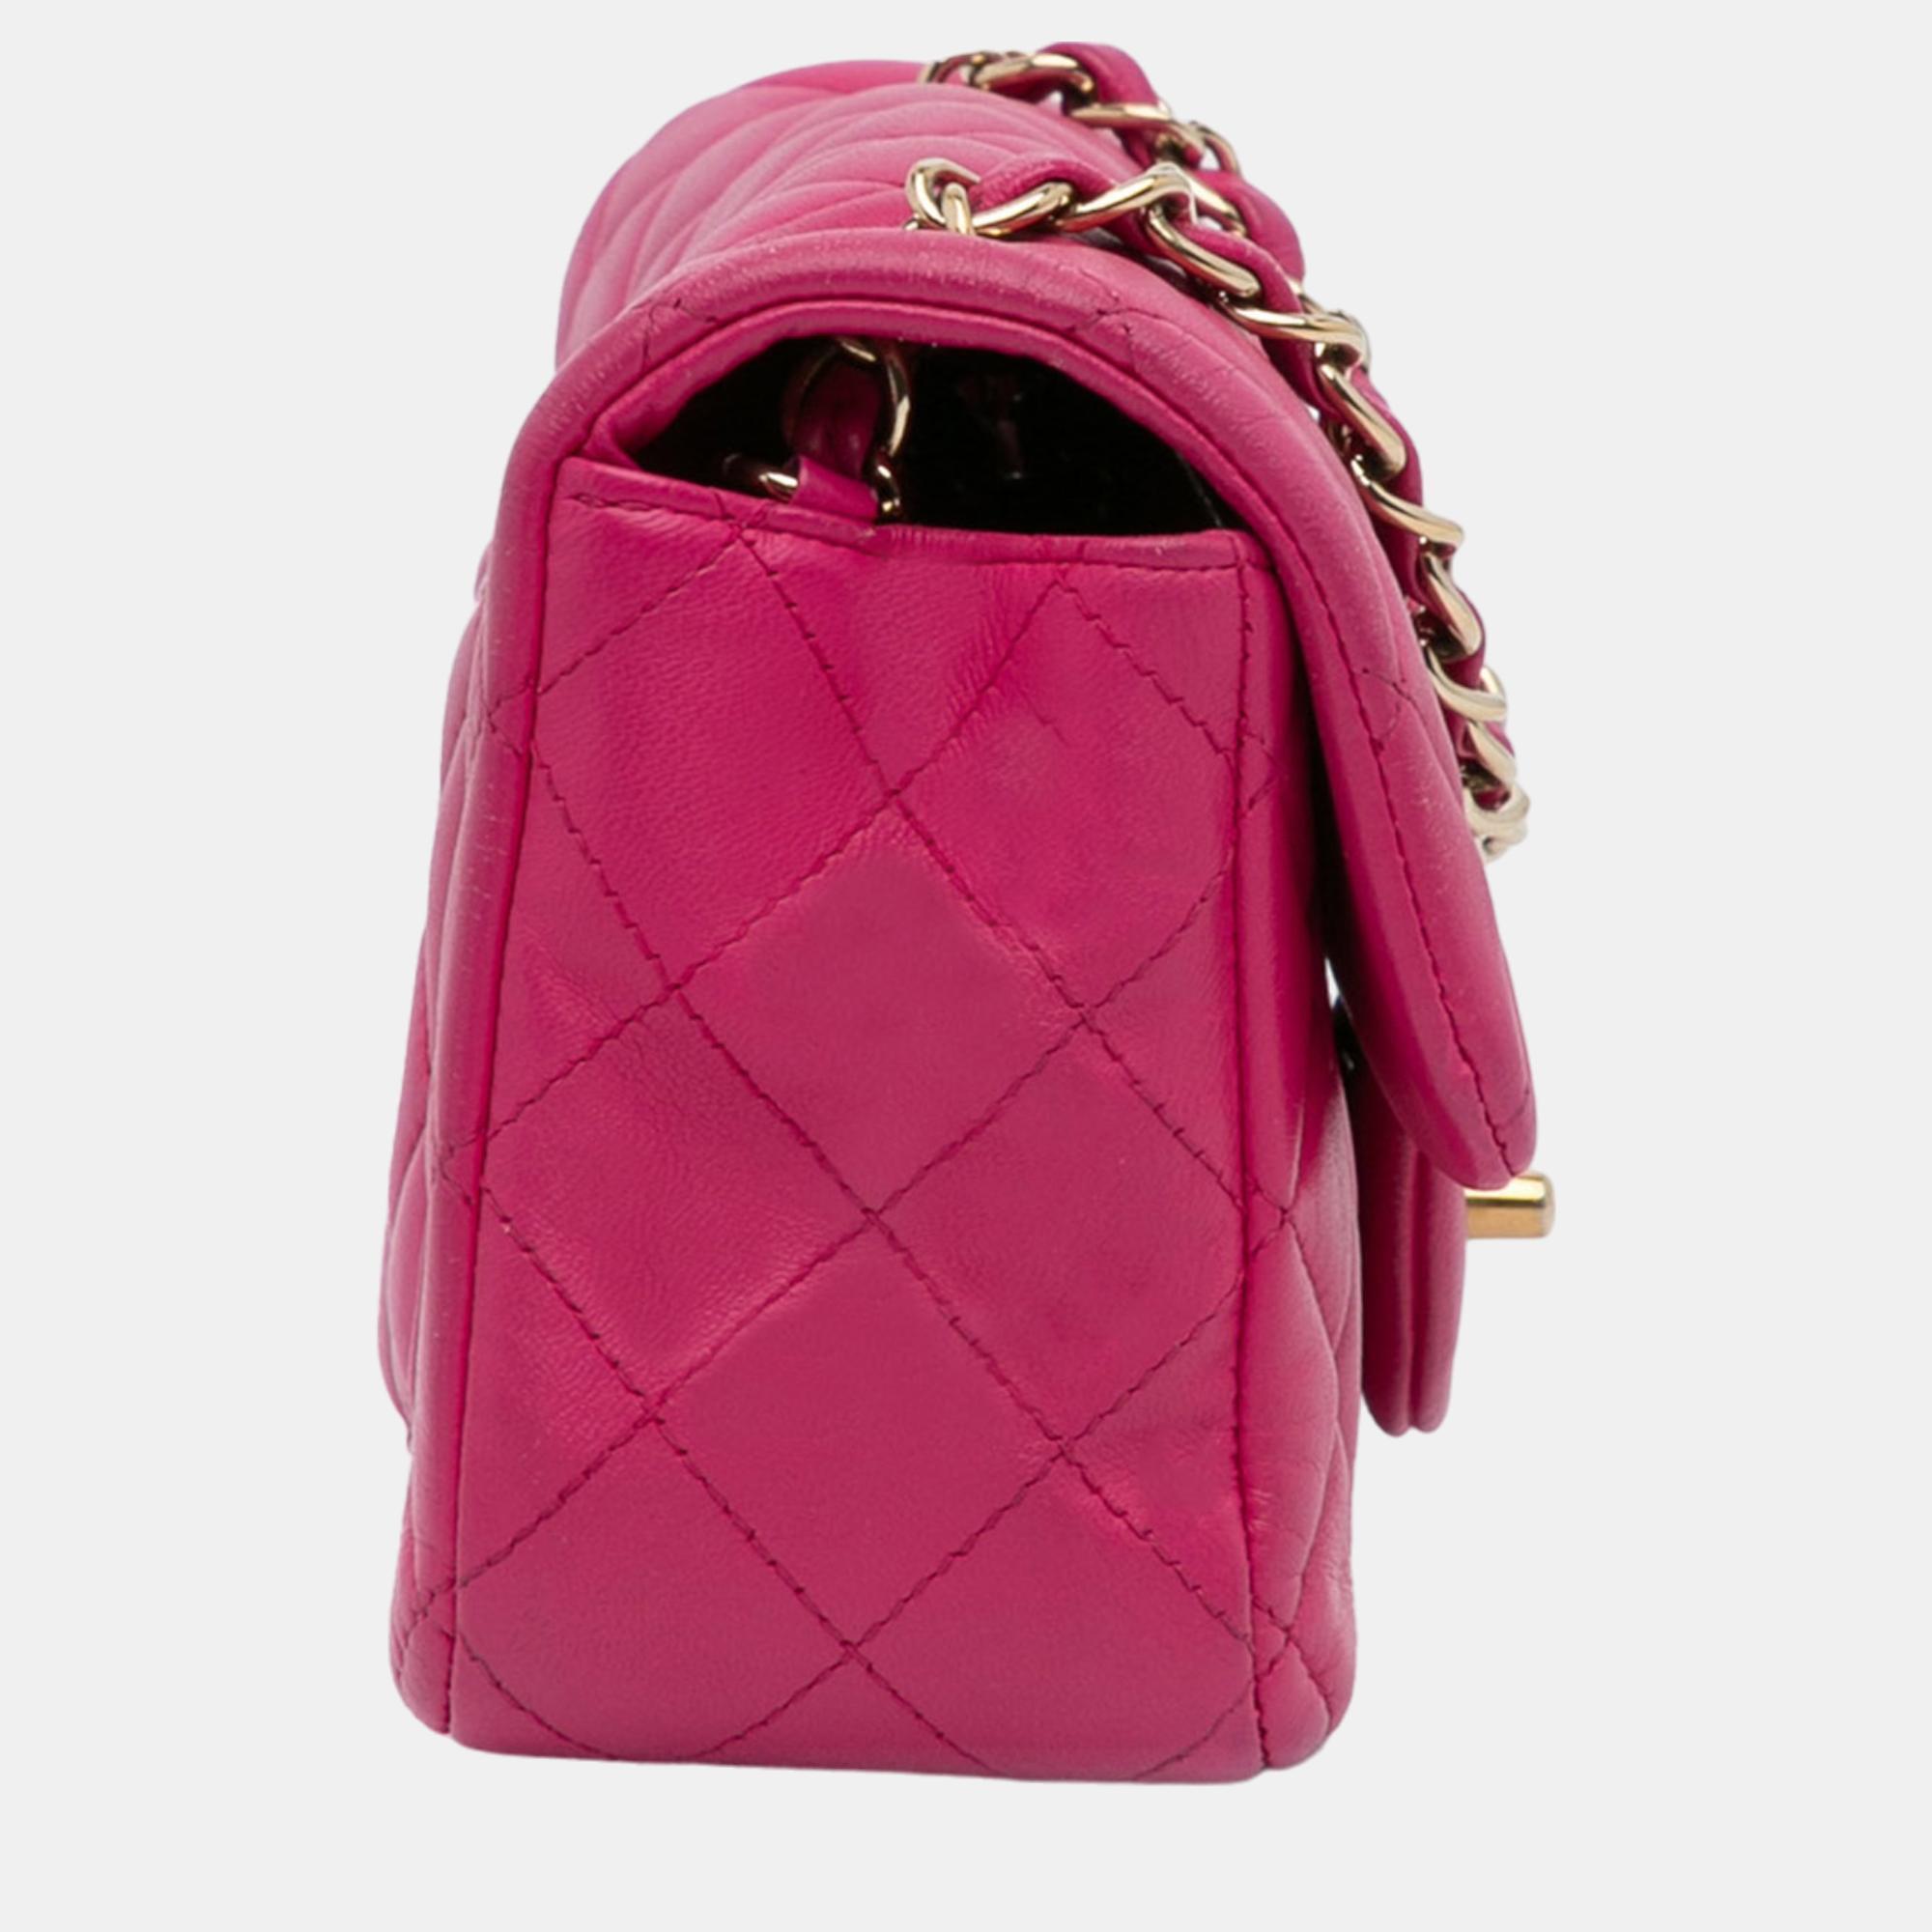 Chanel Pink Mini Classic Lambskin Rectangular Single Flap